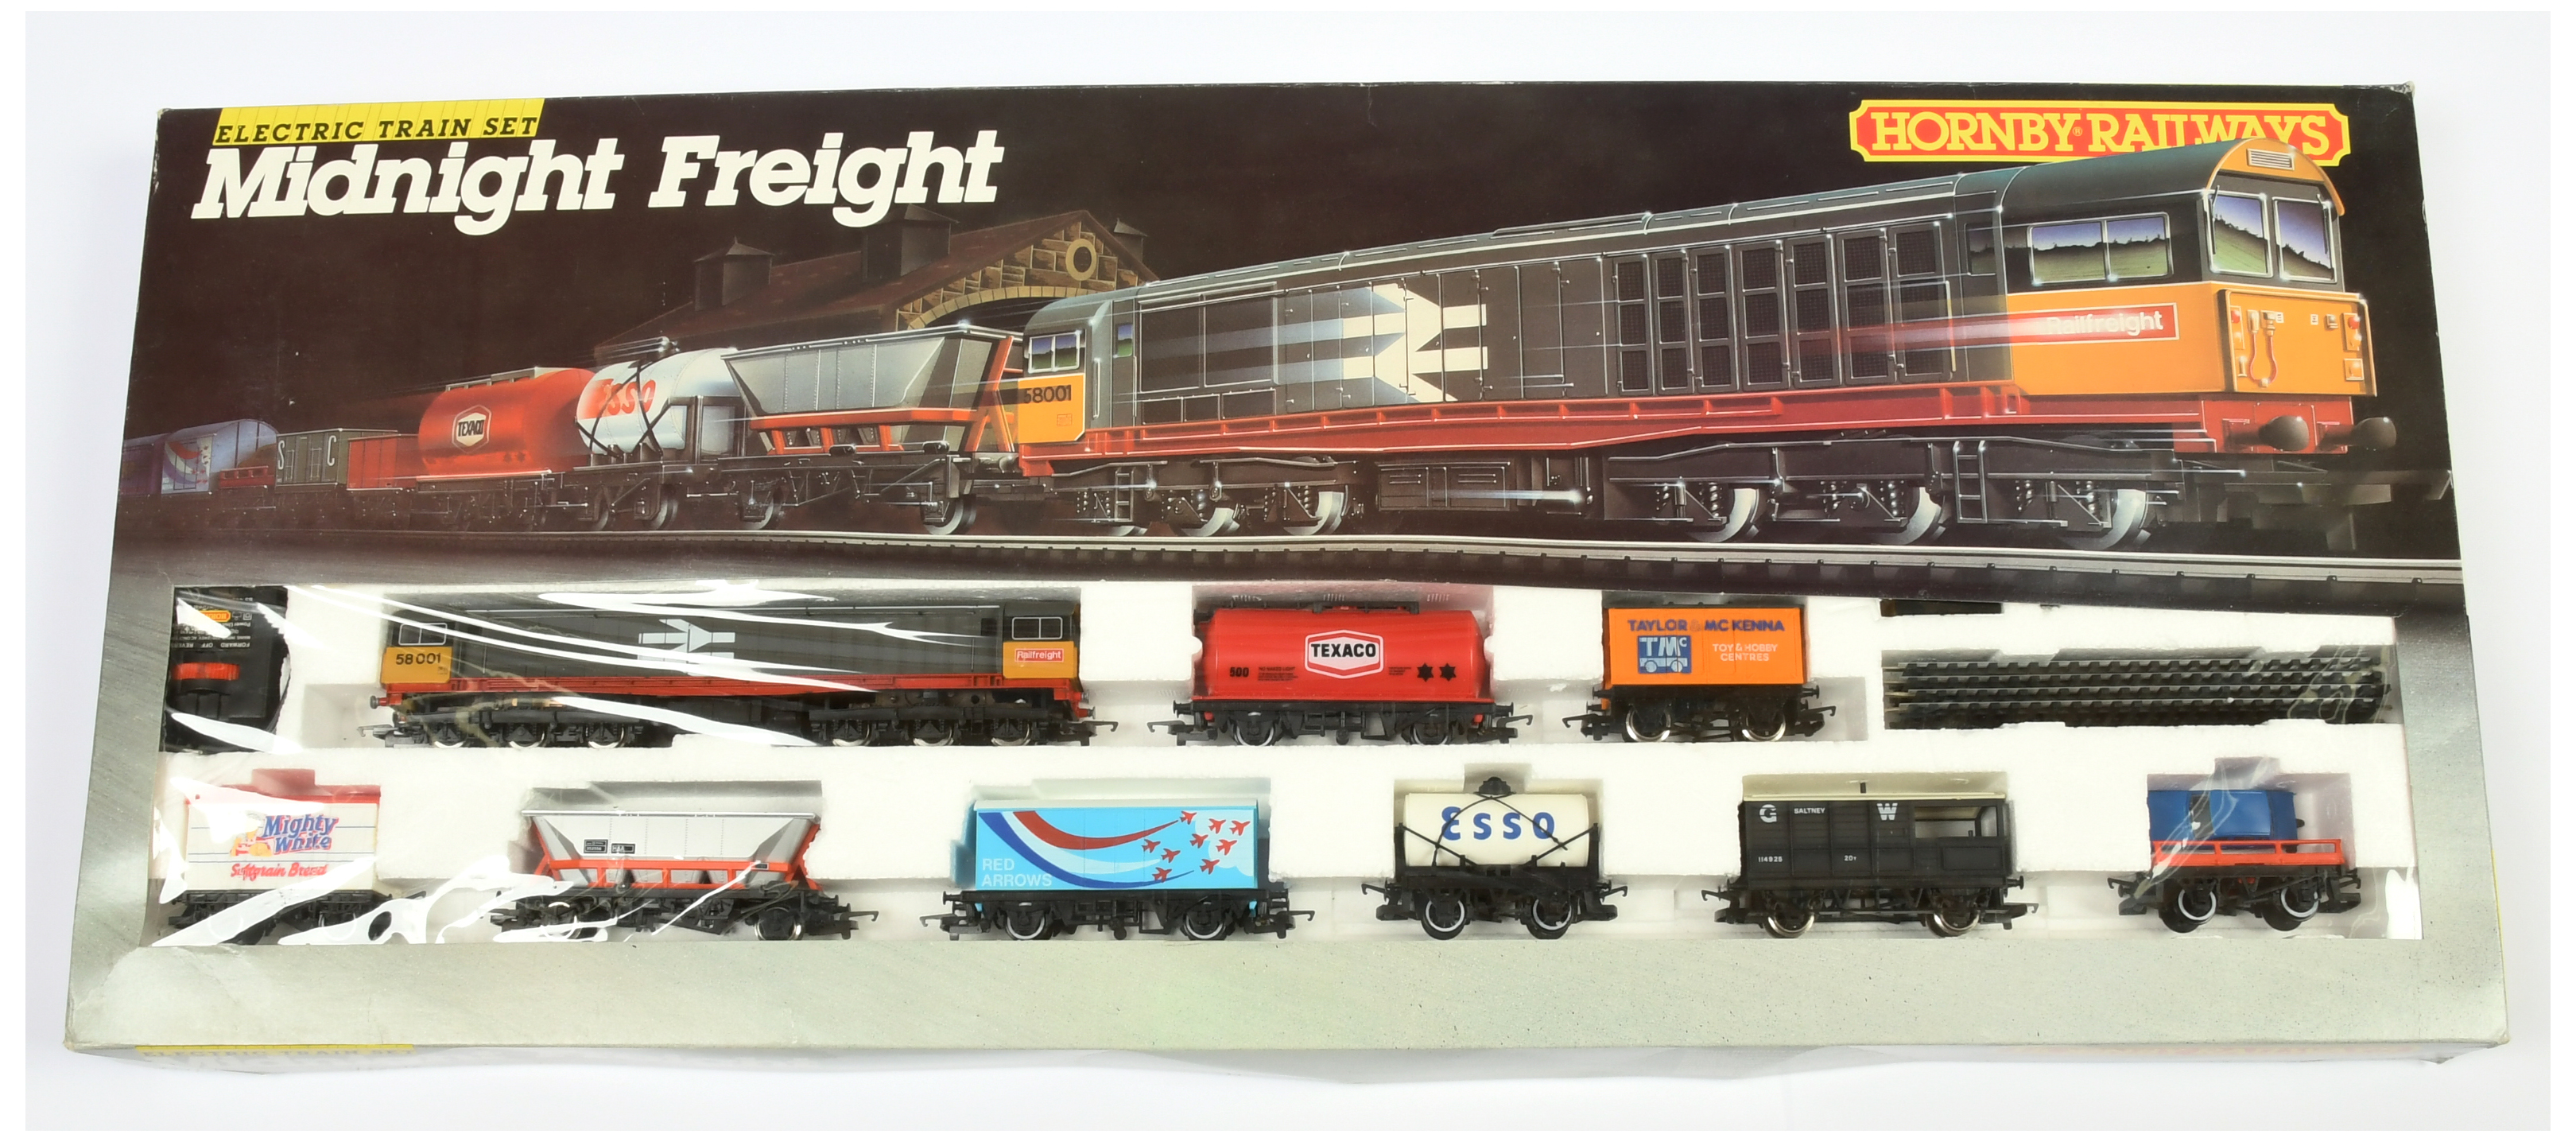 Hornby Railways OO Gauge R674 "Midnight Freight" Train Set 